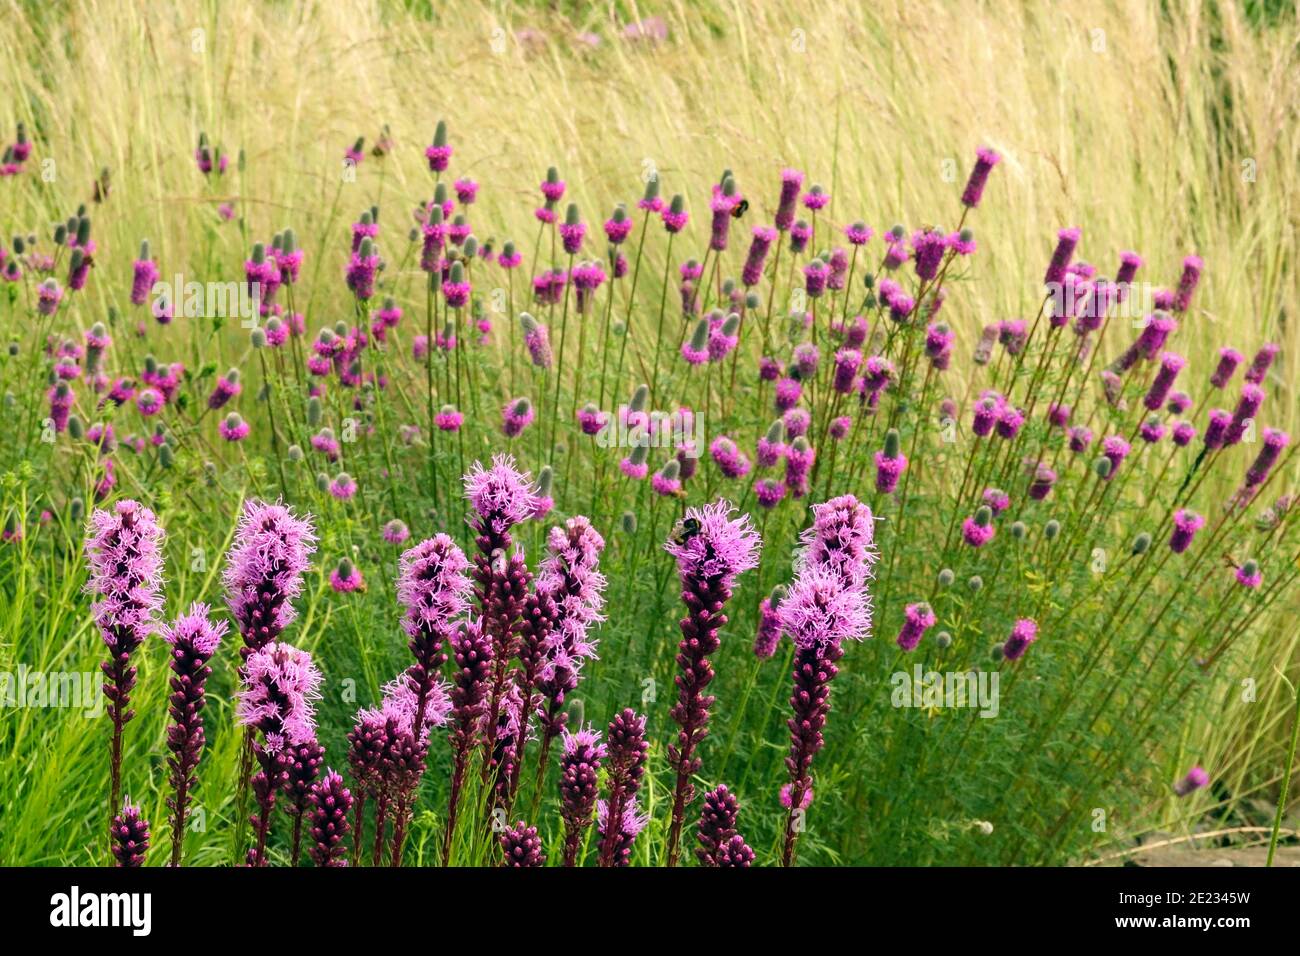 Purple flowers Liatris Flowering in Early Summer Garden Meadow Prairie Scenery Grasses Herbaceous Plants Dalea purpurea Stipa tenuissima Blooming Stock Photo